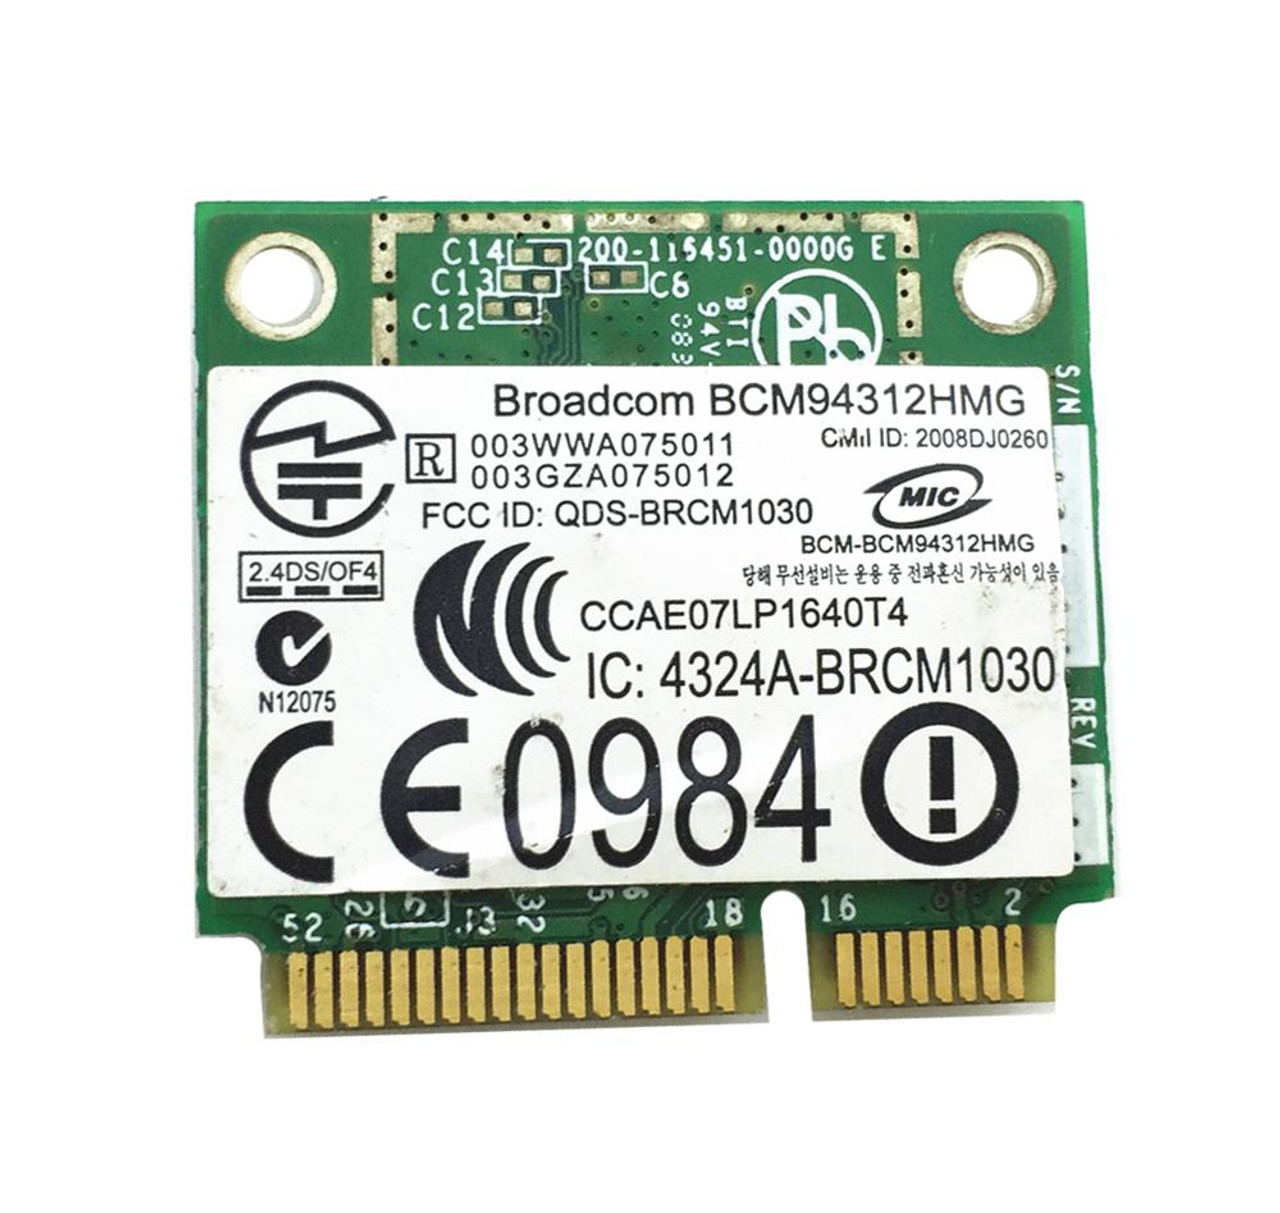 BCM94312HMG HP Broadcom 4312 54Mbps 2.4GHz IEEE 802.11a/b/g Mini PCI Express WLAN Wireless Network Card